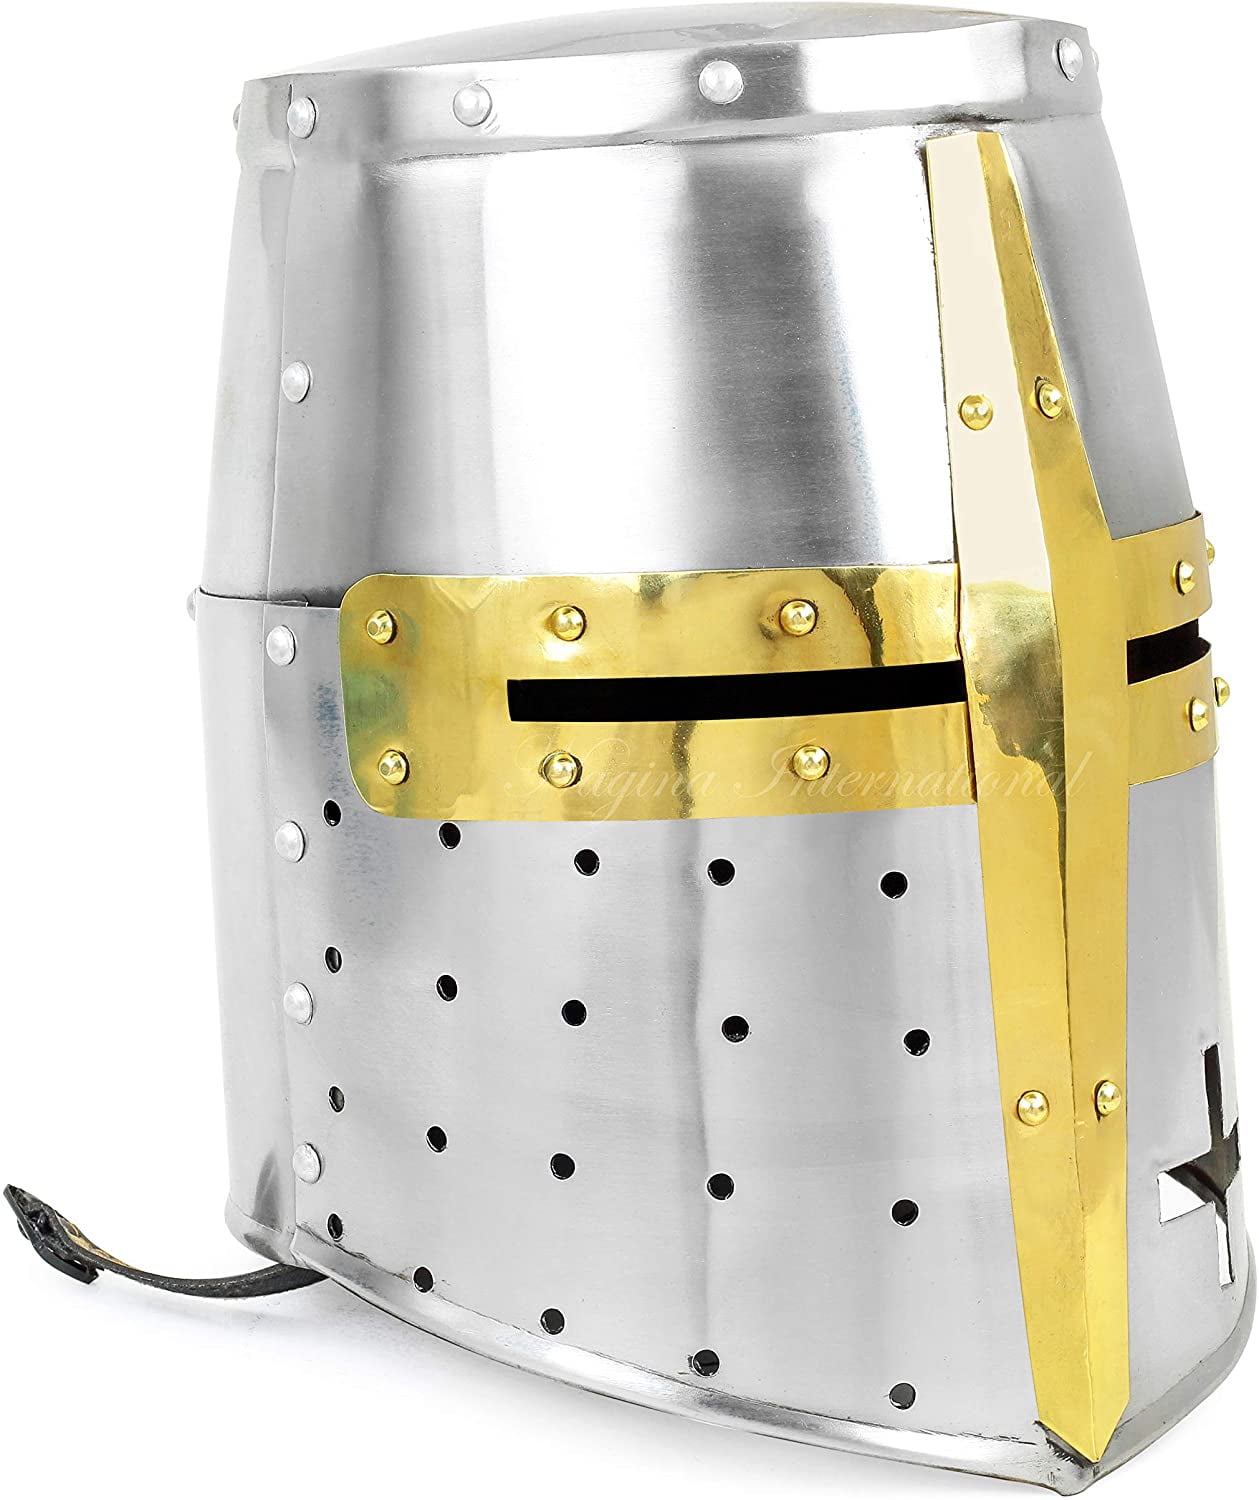 Medieval Templar Crusader Knight Armor Helmet With Wooden Stand Greek Spartan 